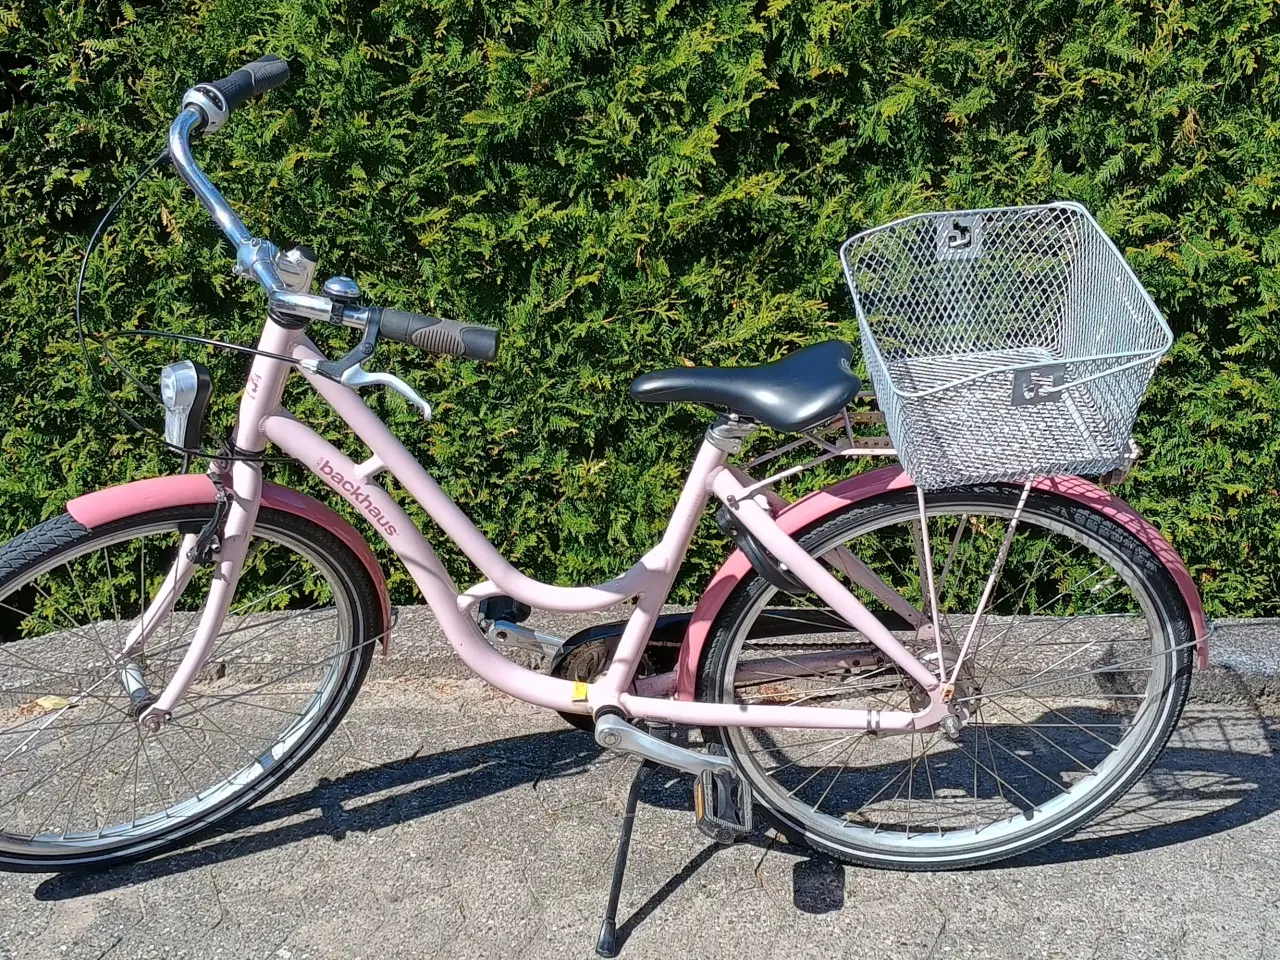 Billede 1 - Pink / lyserød pigecykel med 7 gear.